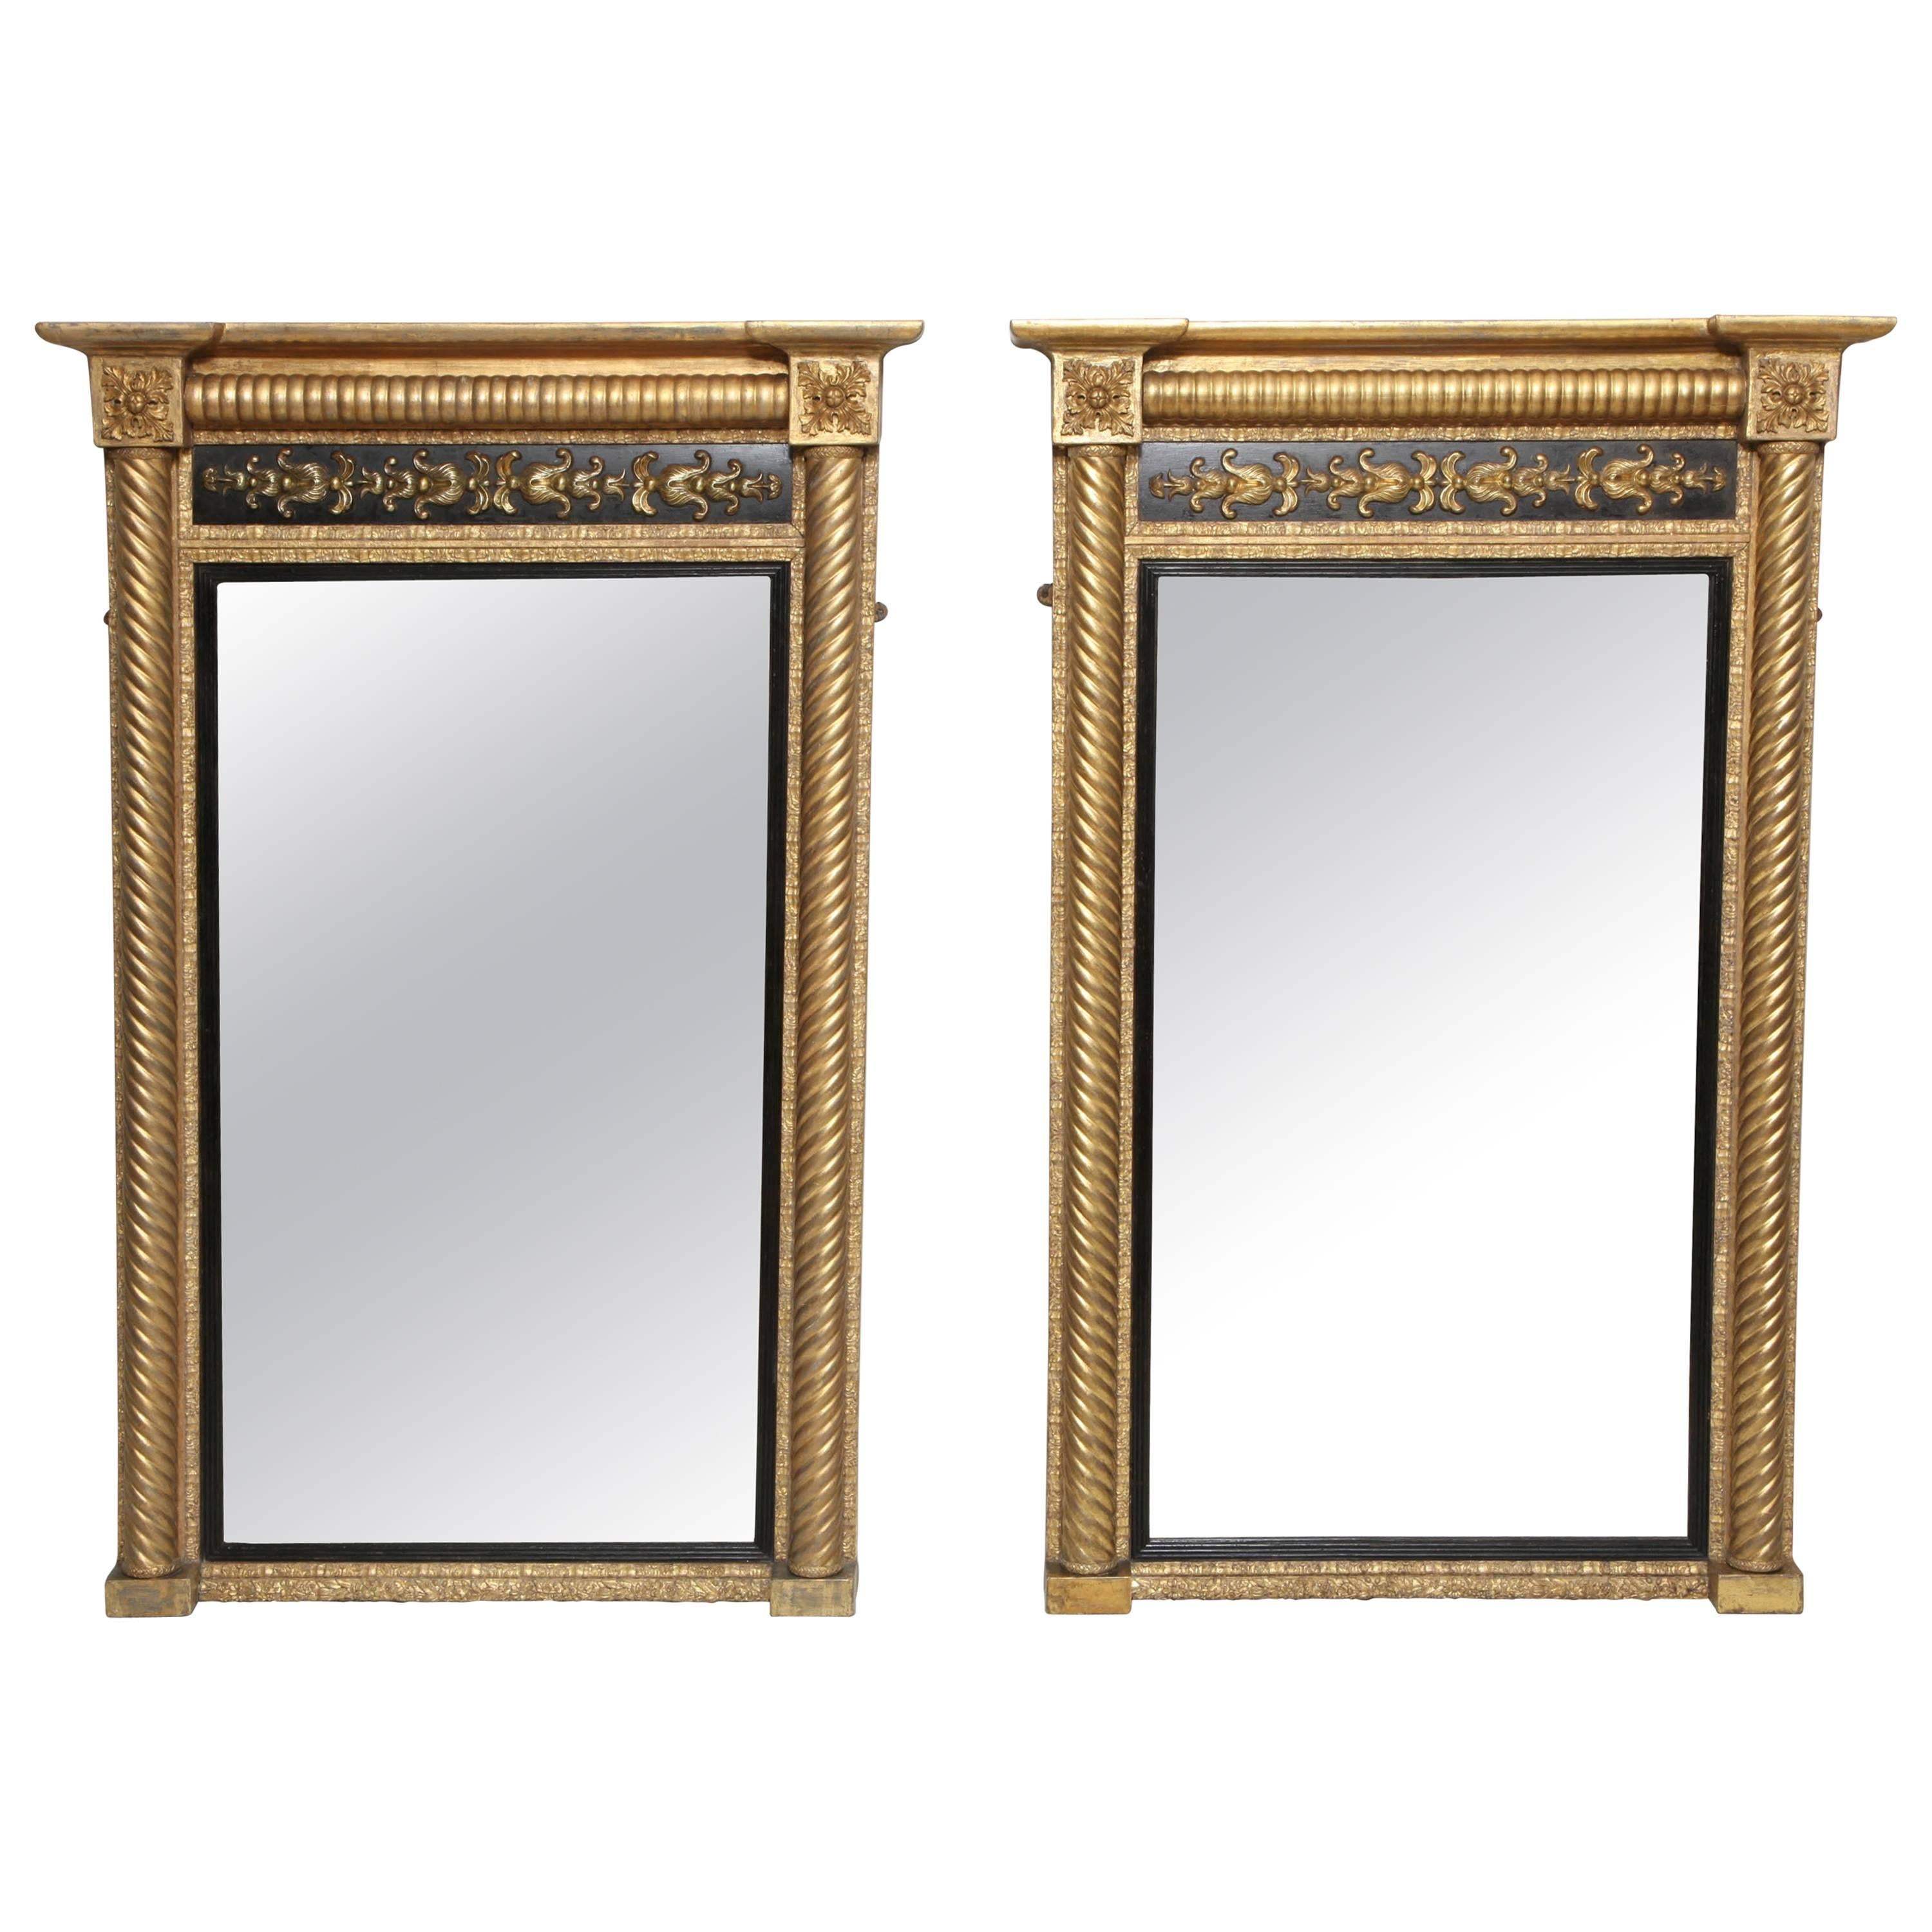 Pair of Neoclassical Pier Mirrors